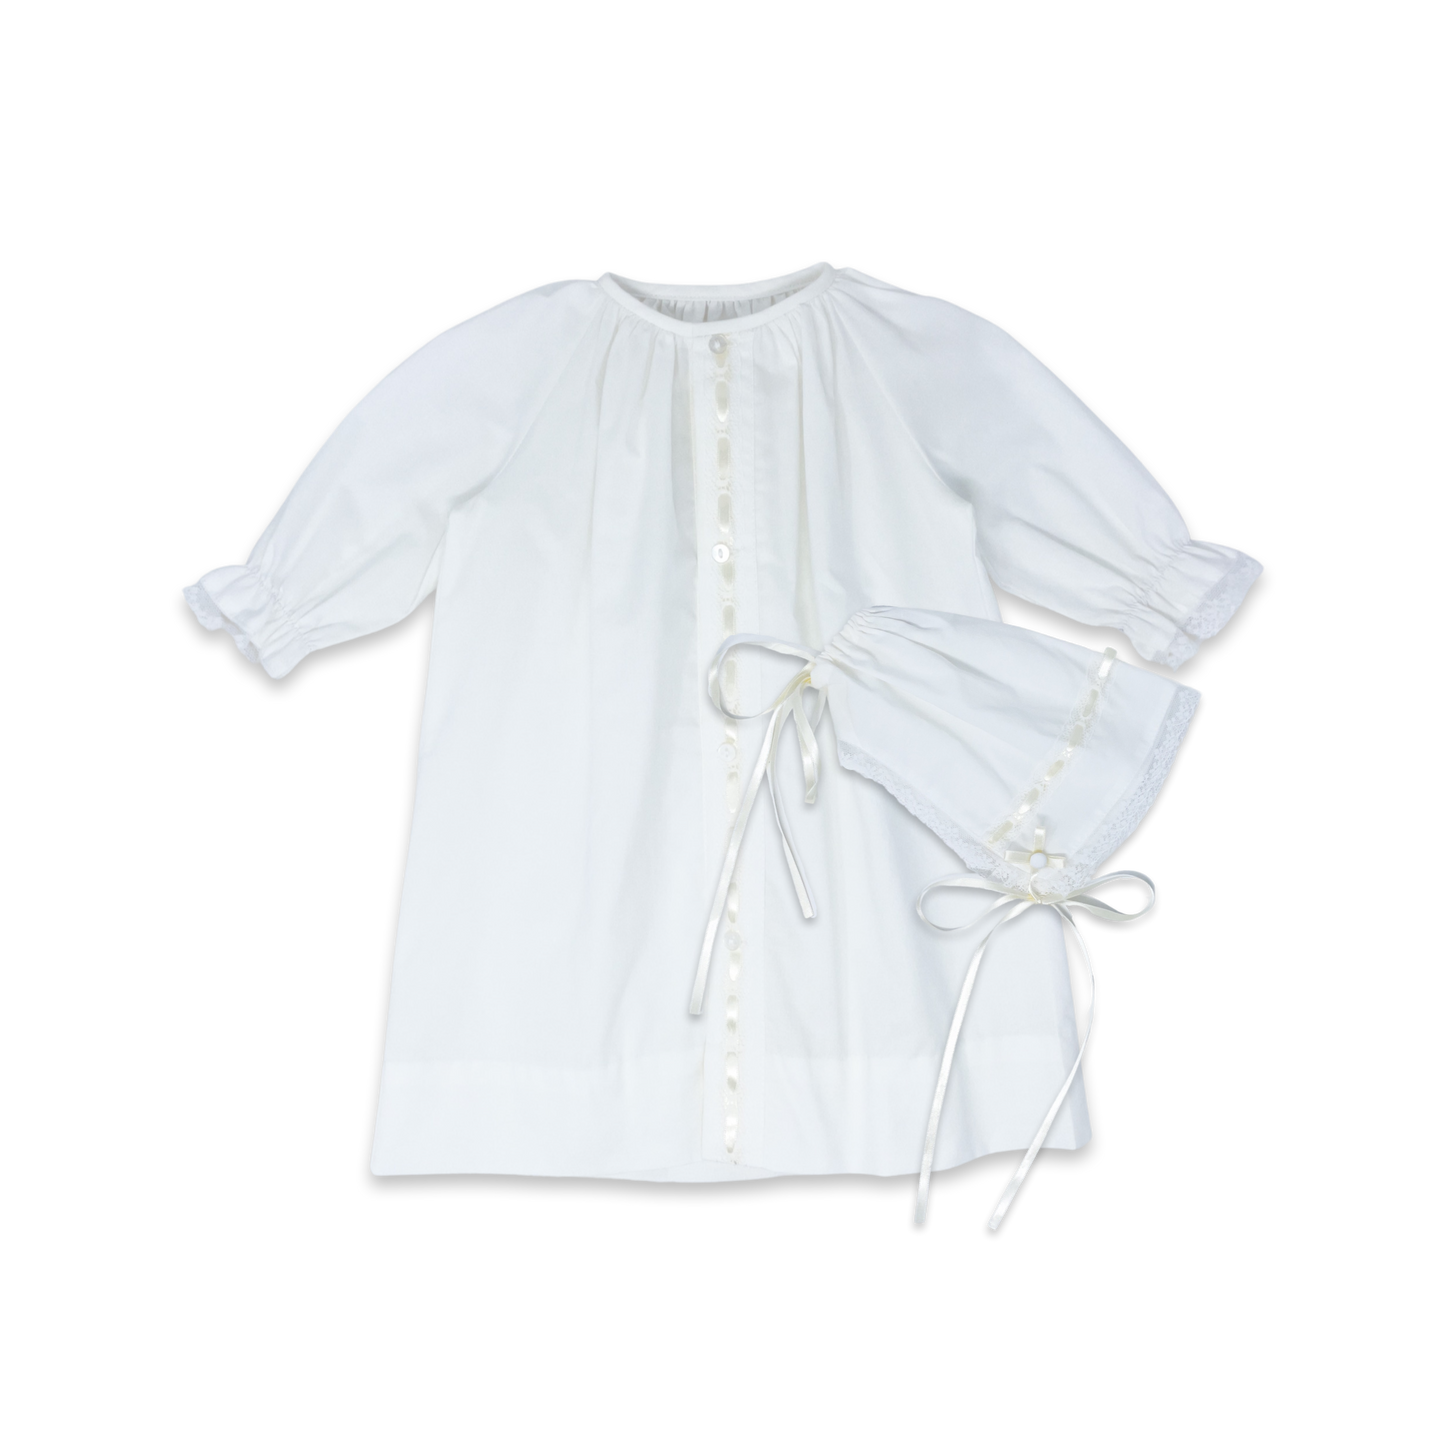 Lullaby Set - Original Daygown Set Blessings White Batiste/Ecru